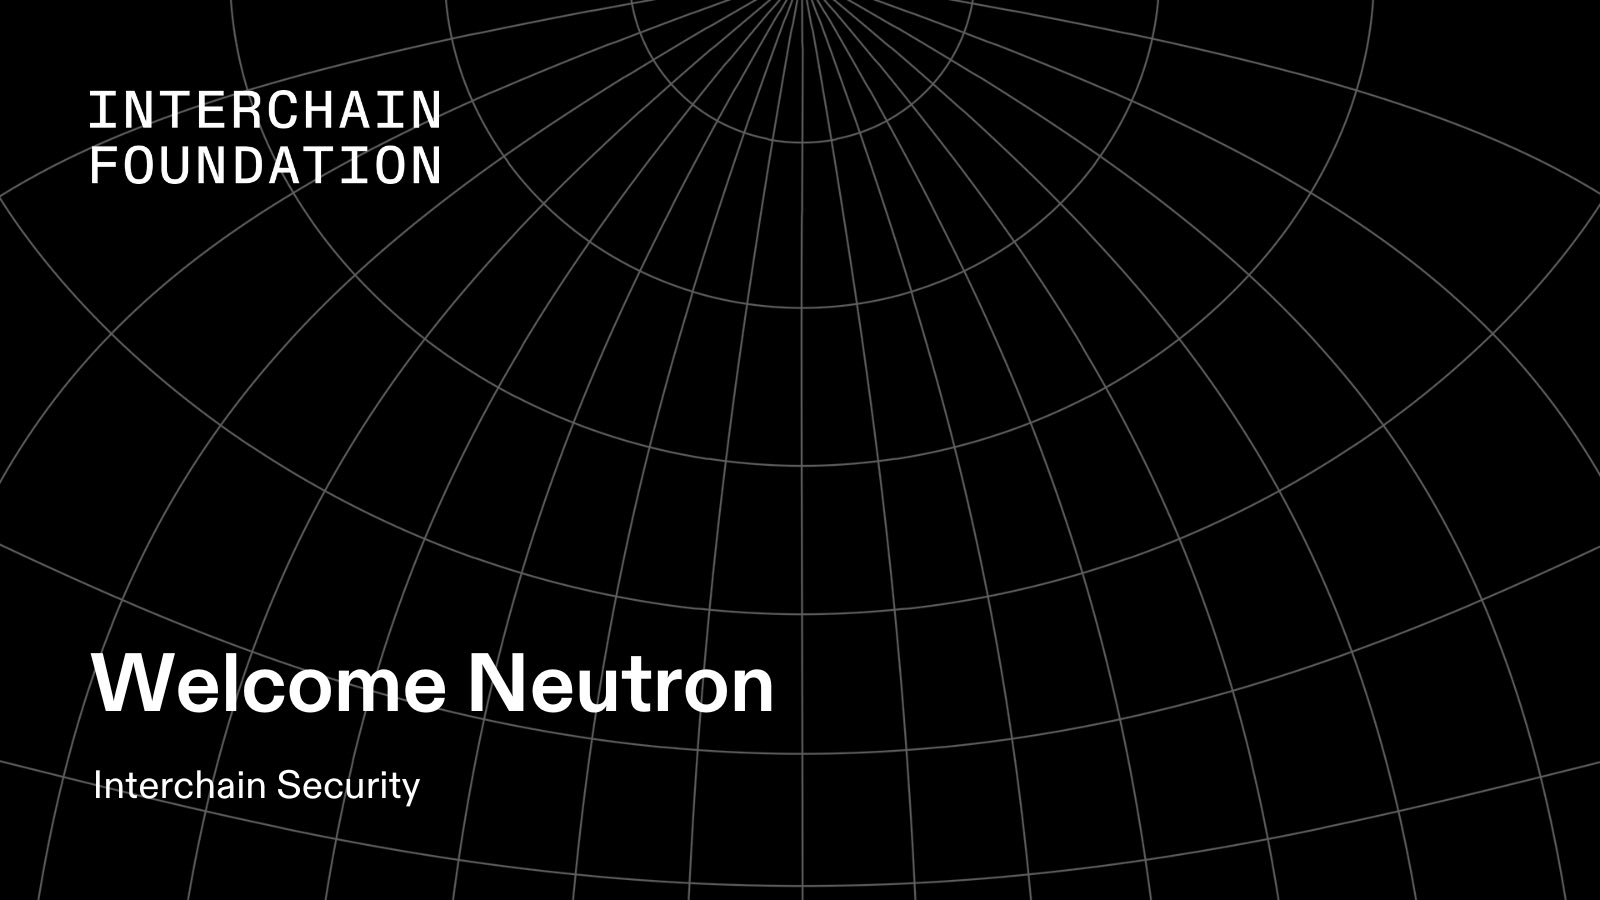 The Interchain Foundation welcomes Neutron, ushering in a new era of blockchain development